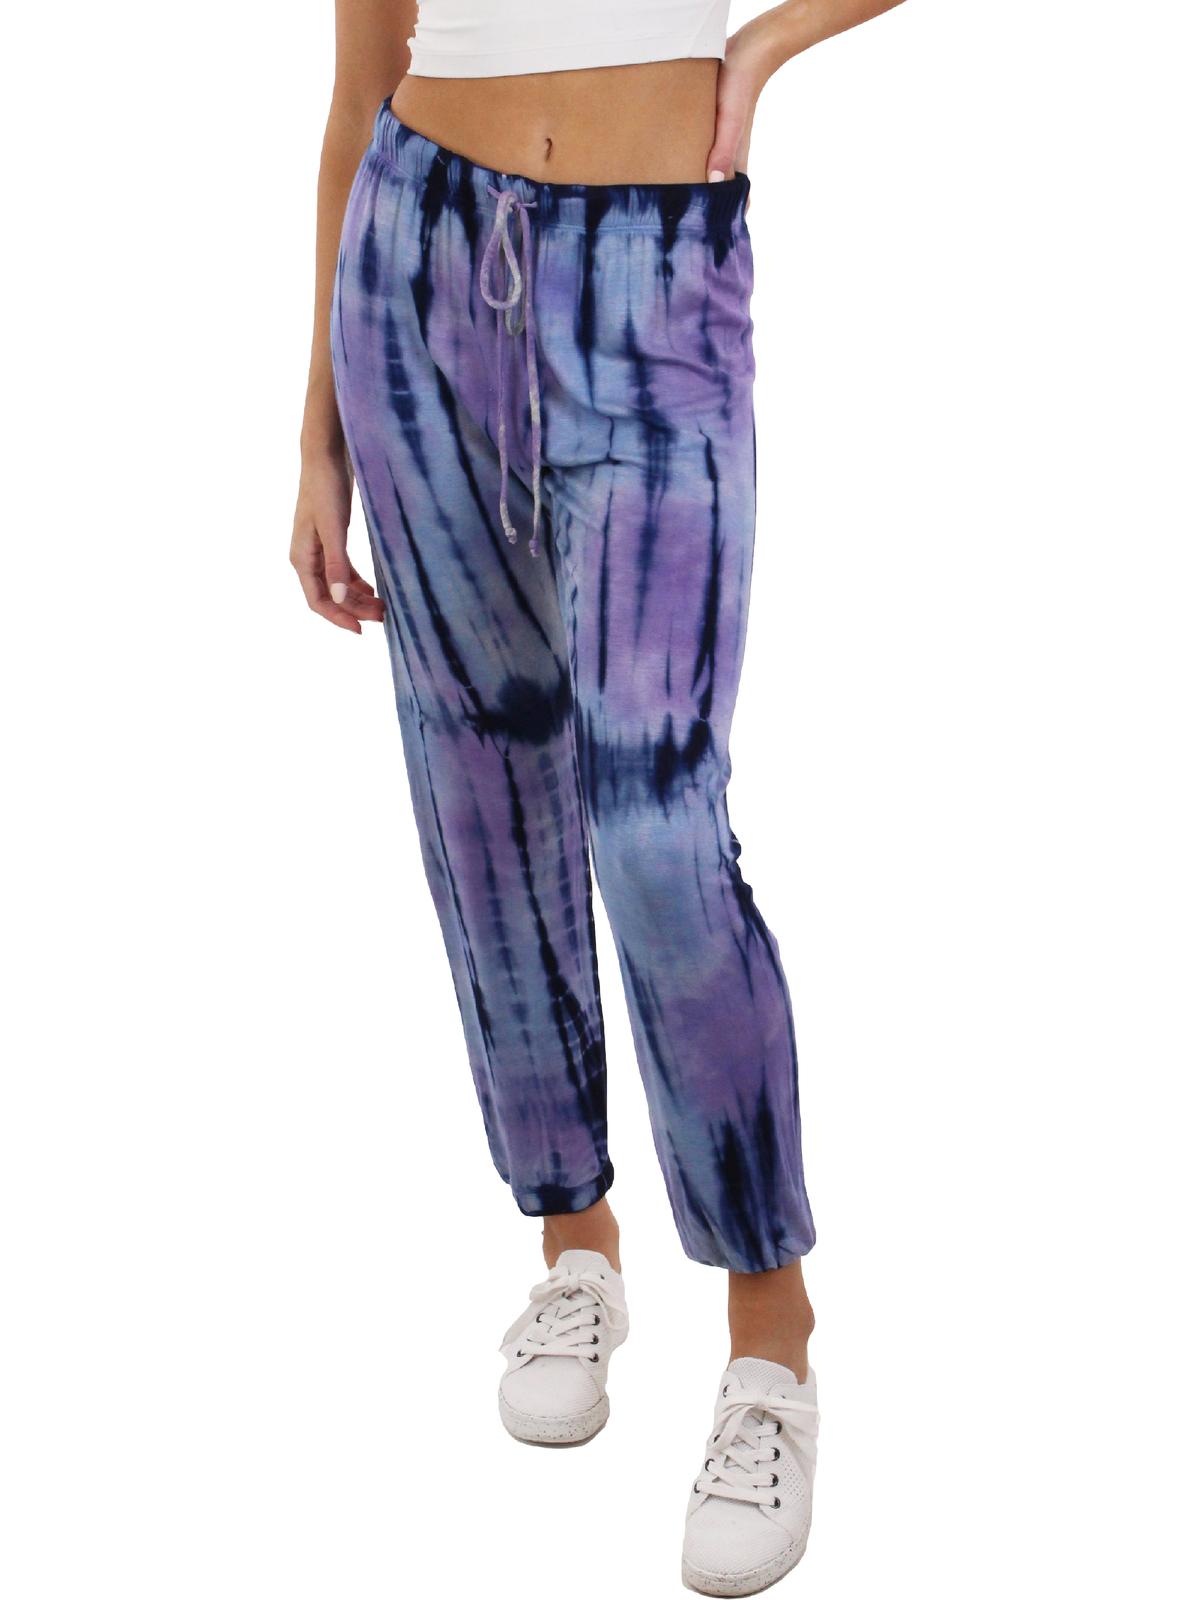 P.J. Salvage Womens 3-Tone Pajama Shorts, Multicoloured, Medium